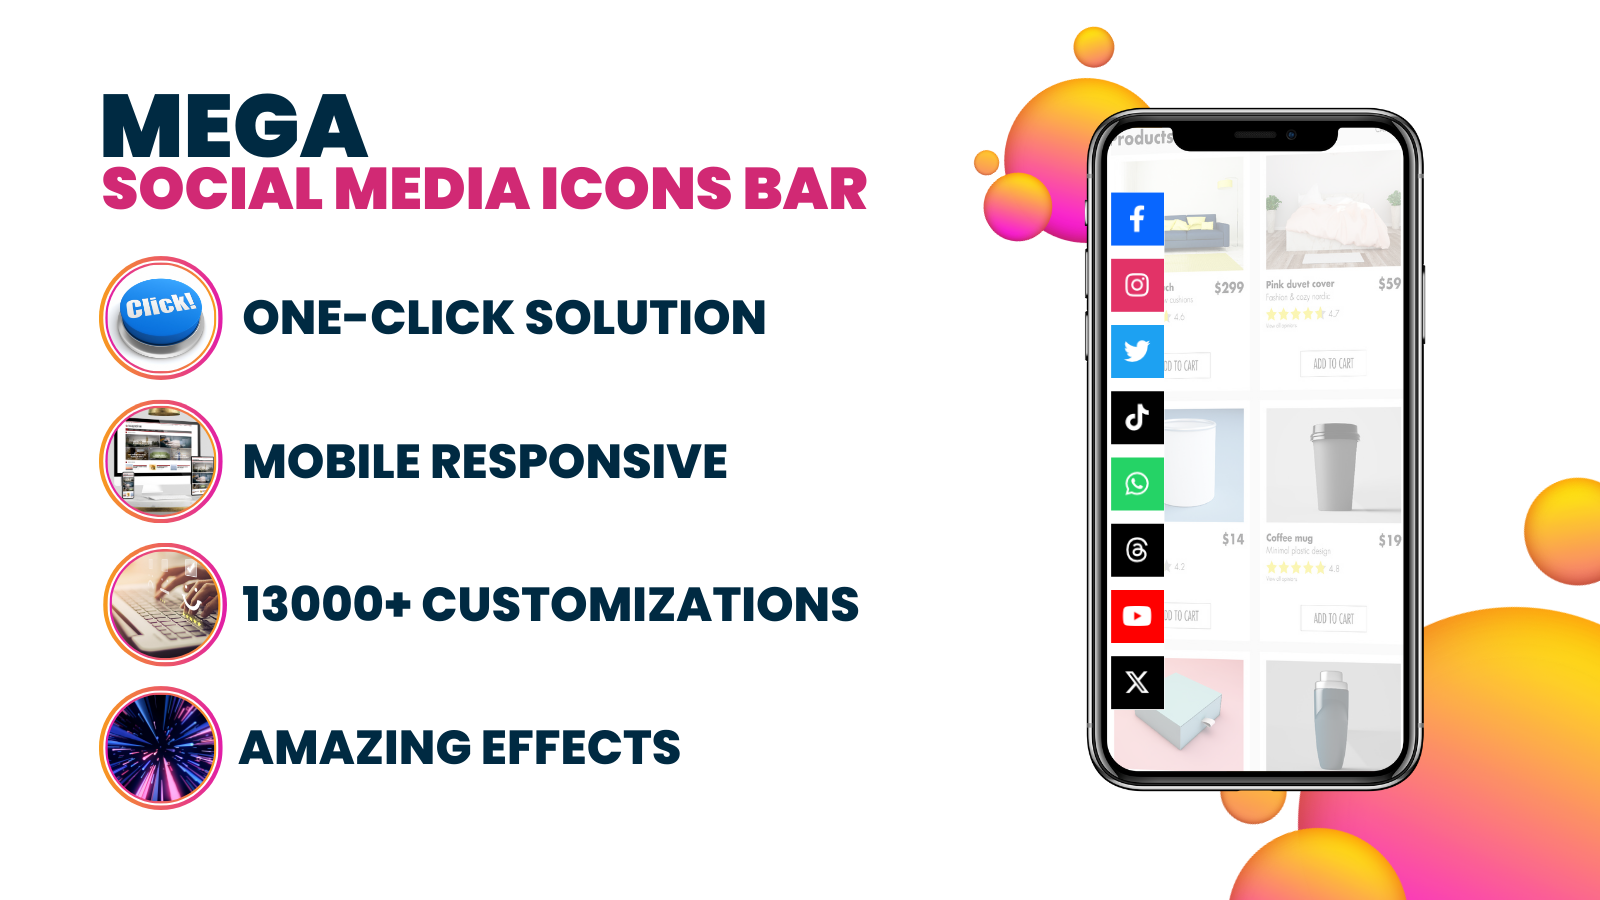 Mega Social Media Icons Bar: Dynamische Icon-Platzierung